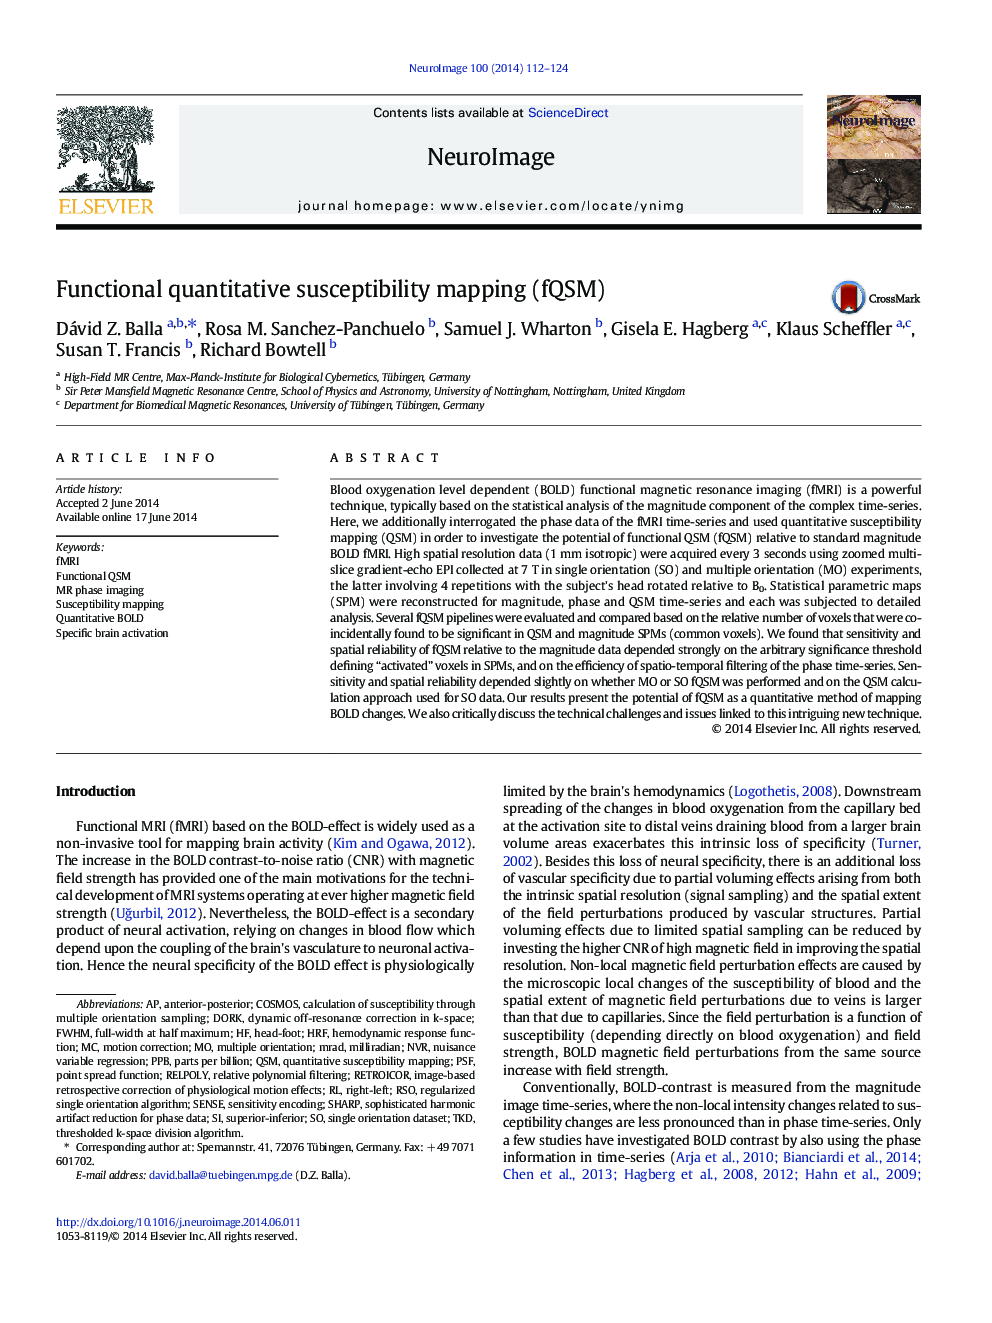 Functional quantitative susceptibility mapping (fQSM)